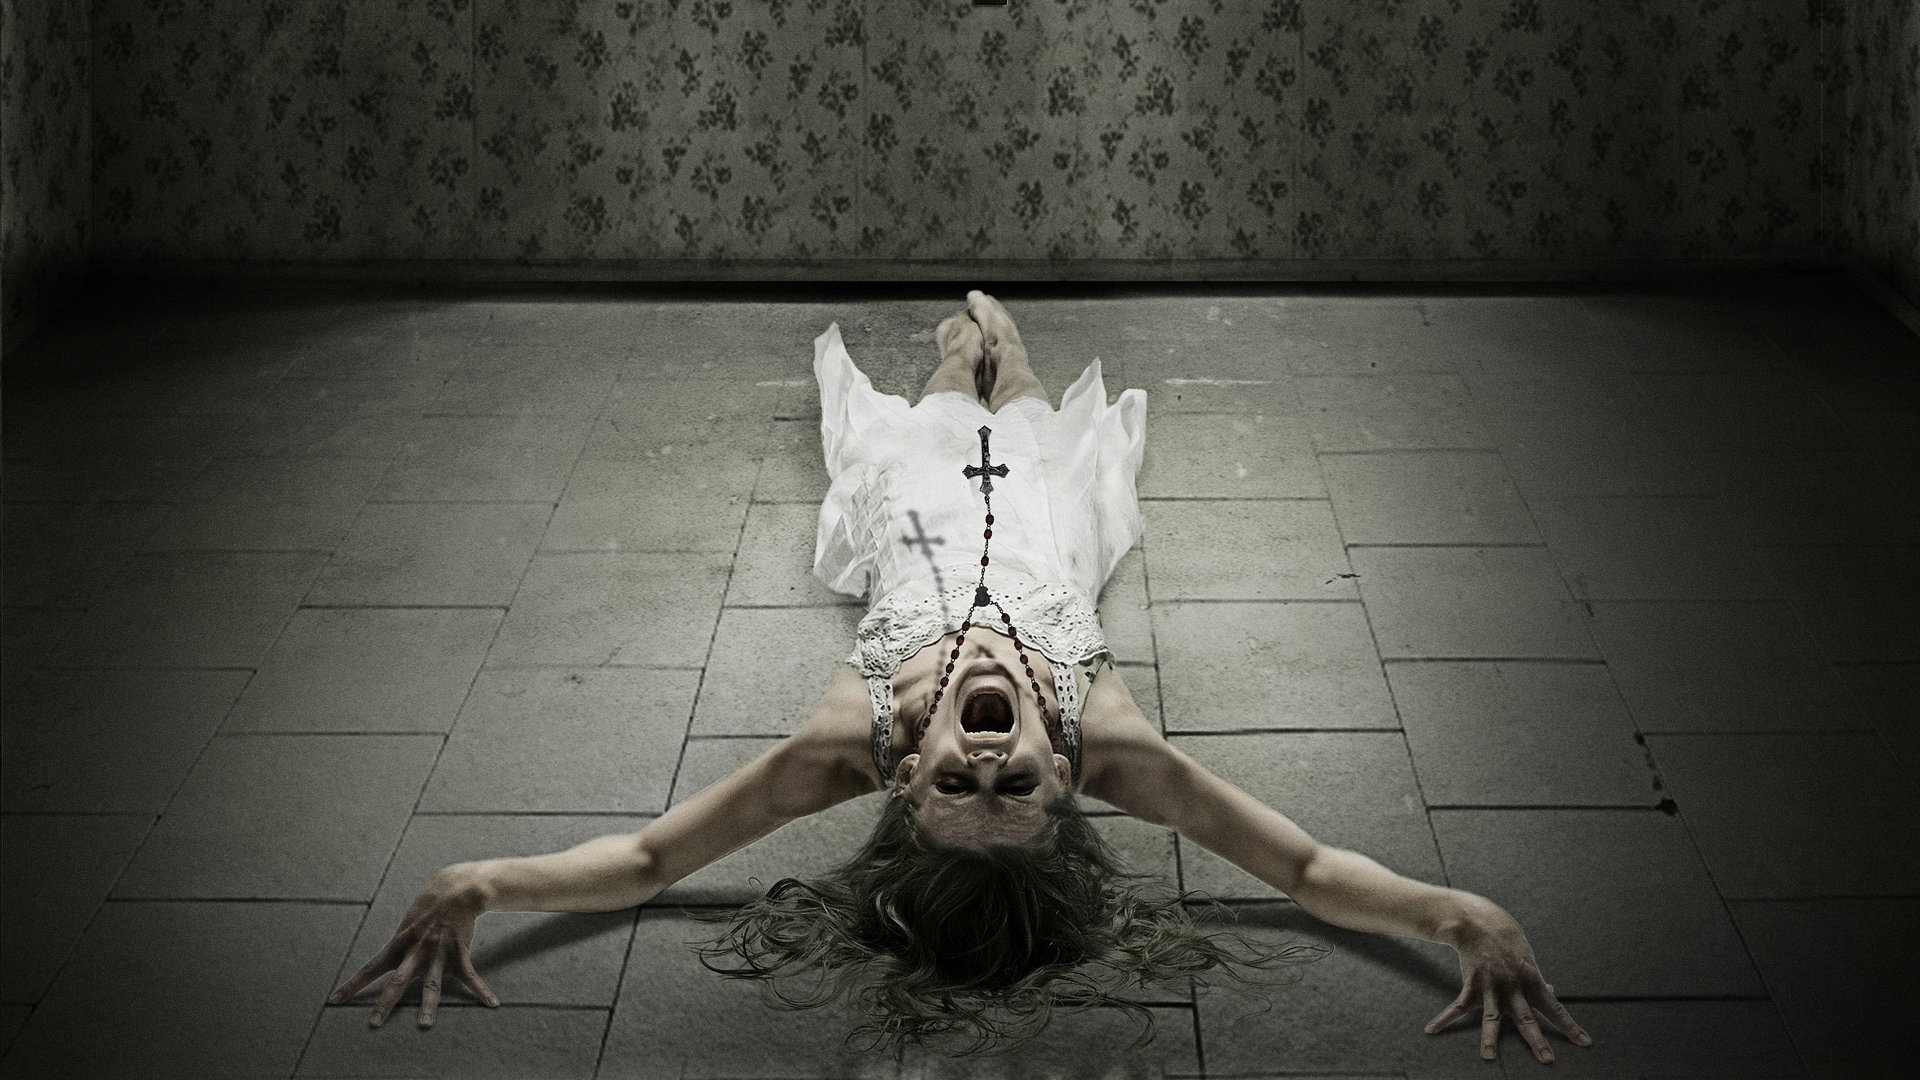 The Last Exorcism - Part II